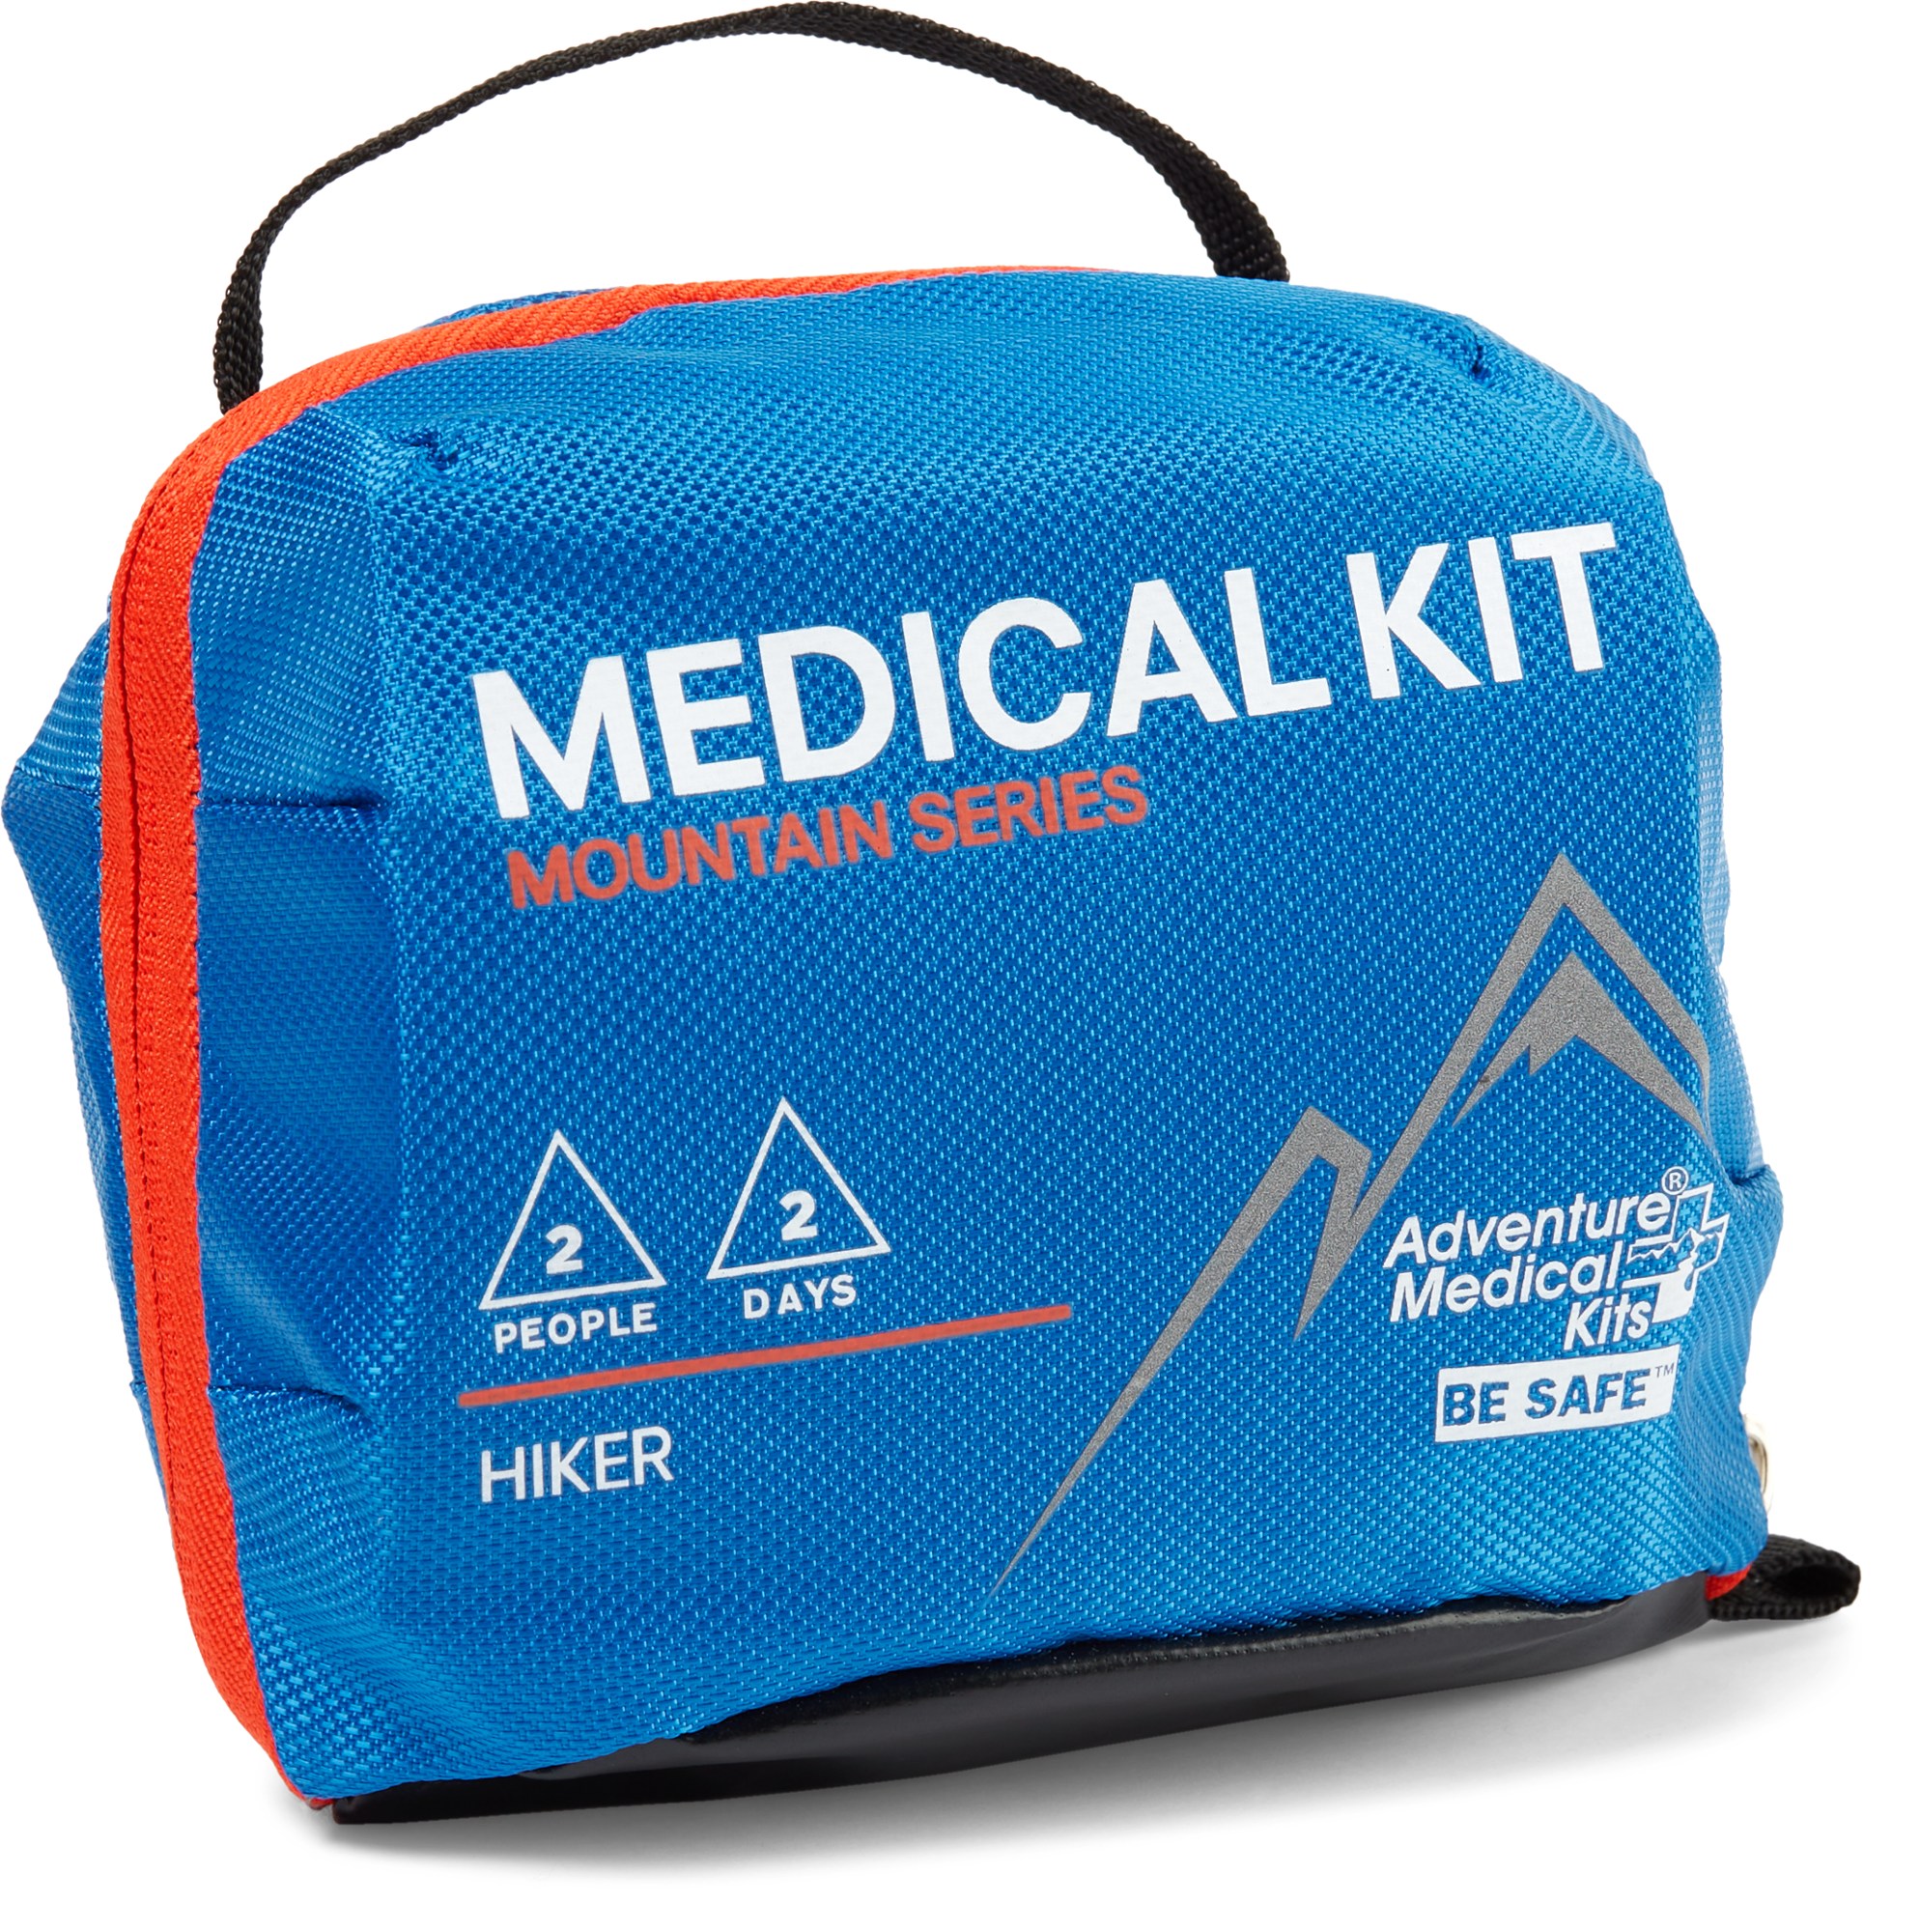 Медицинский набор для туристов Mountain Series Adventure Medical Kits, синий quikclot trauma pack pro жгут quikclot adventure medical kits цвет one color